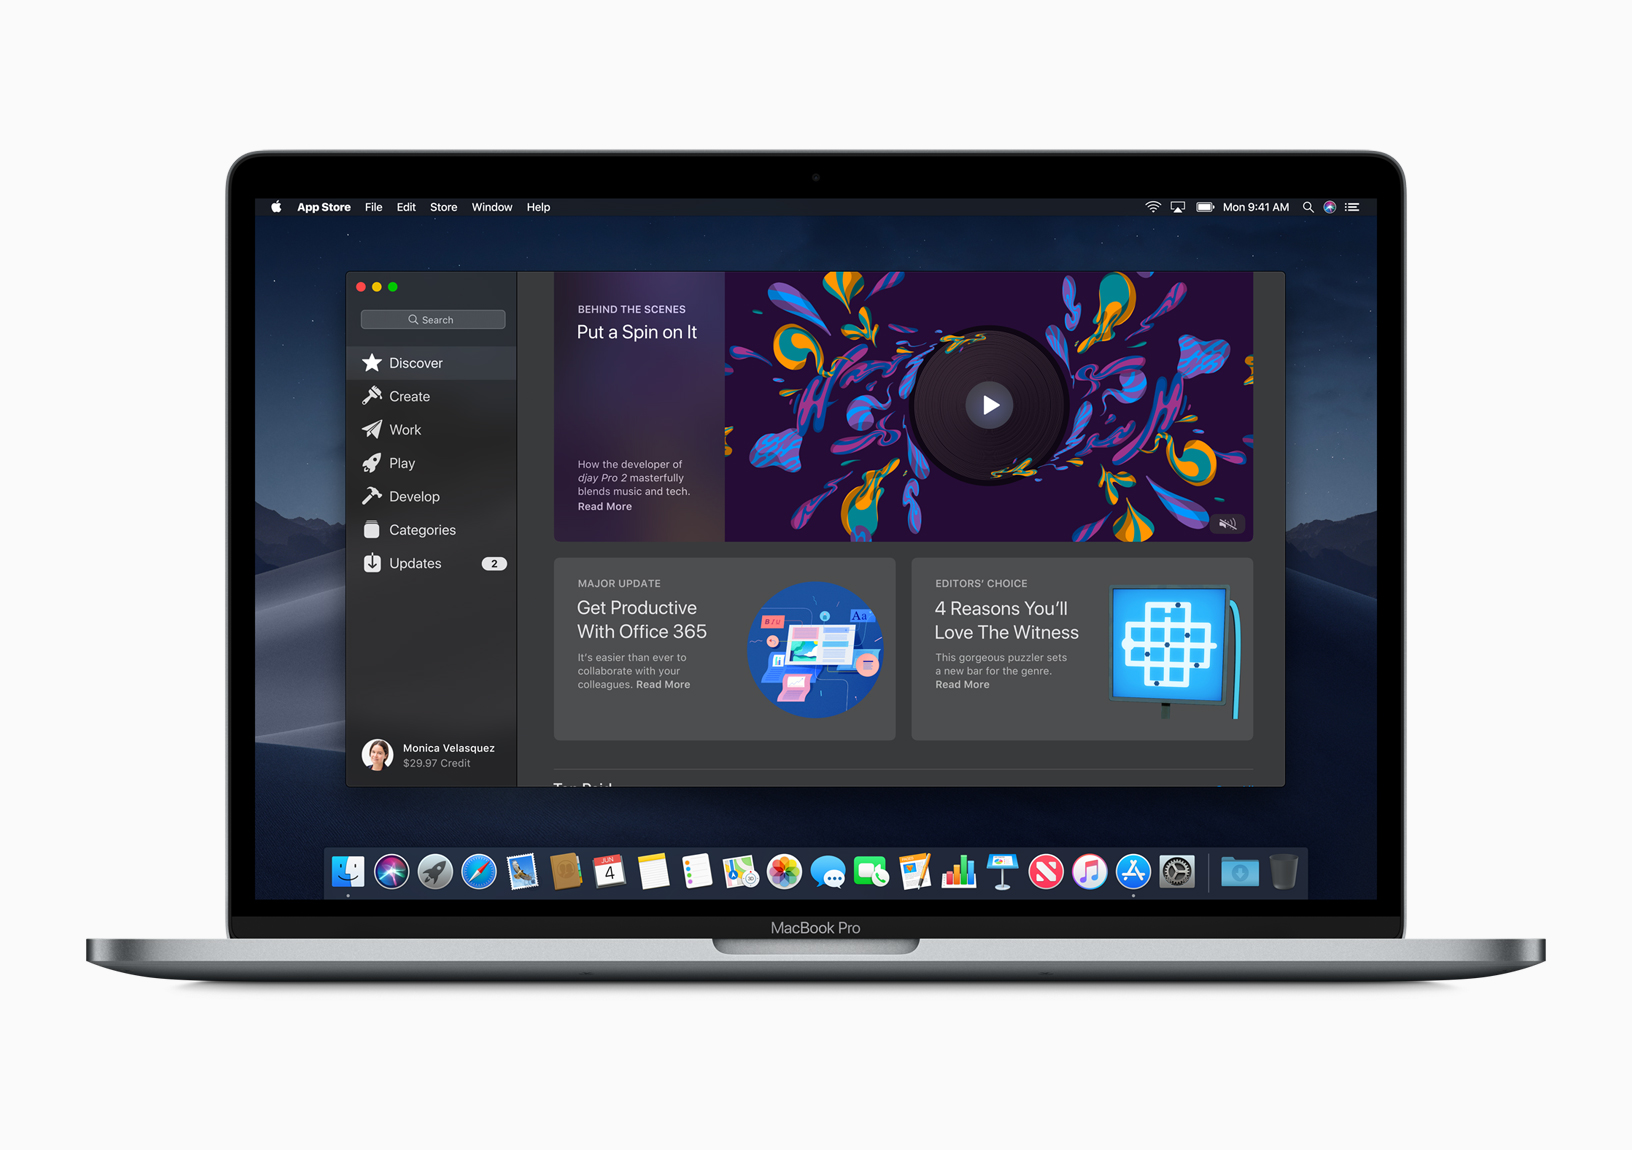 Mac app store show download progress